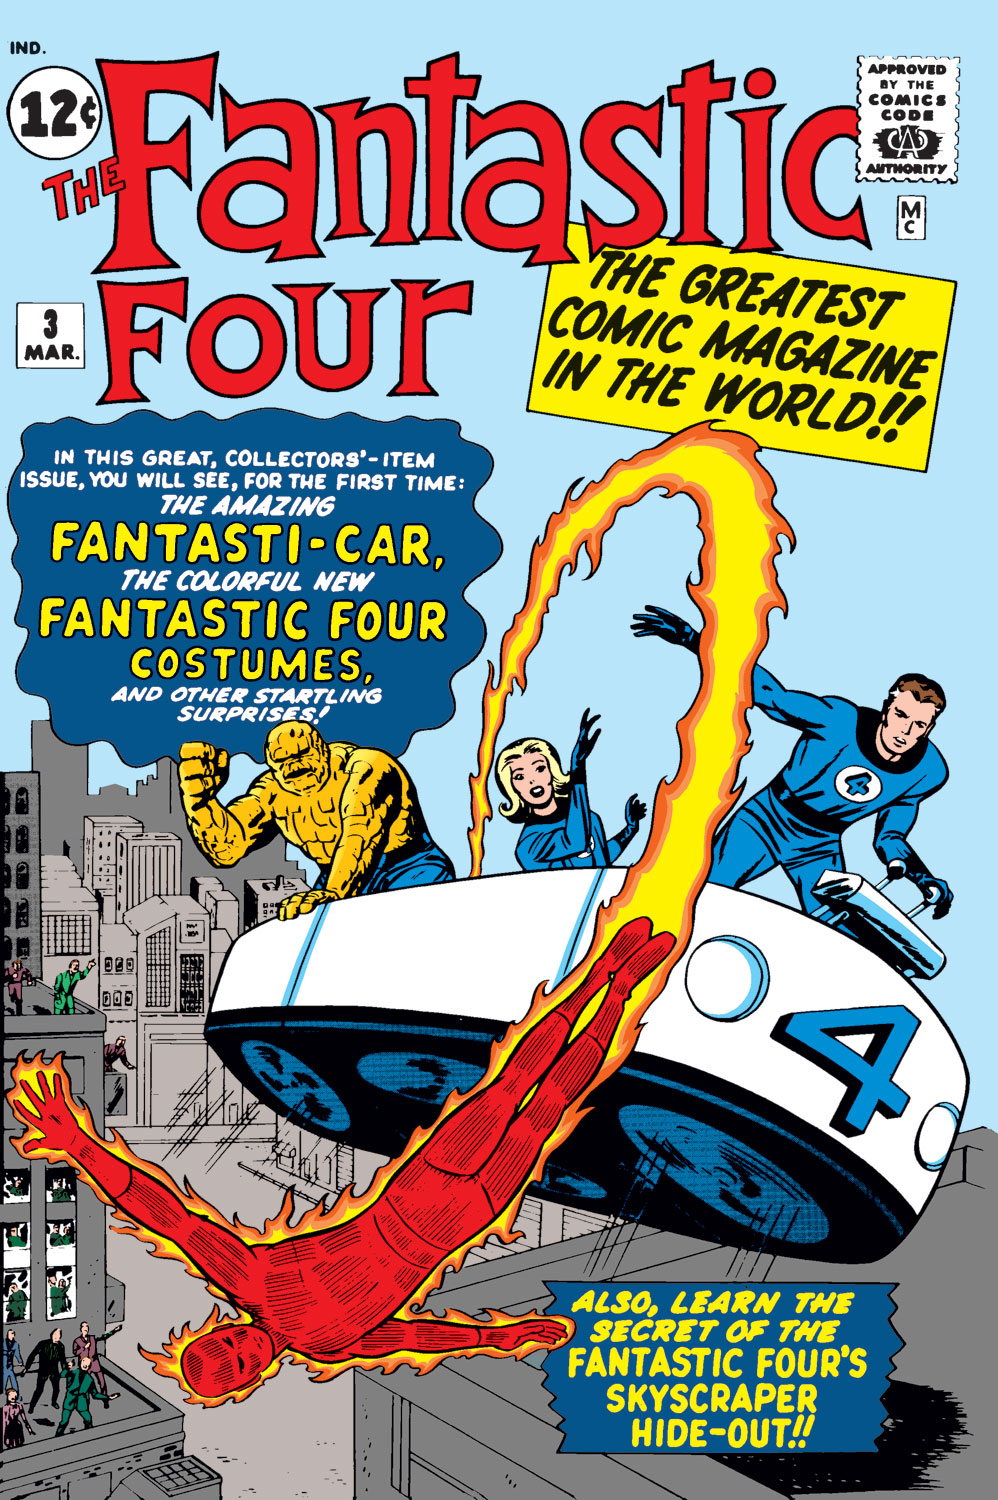 Fantastic Four (1961) #3